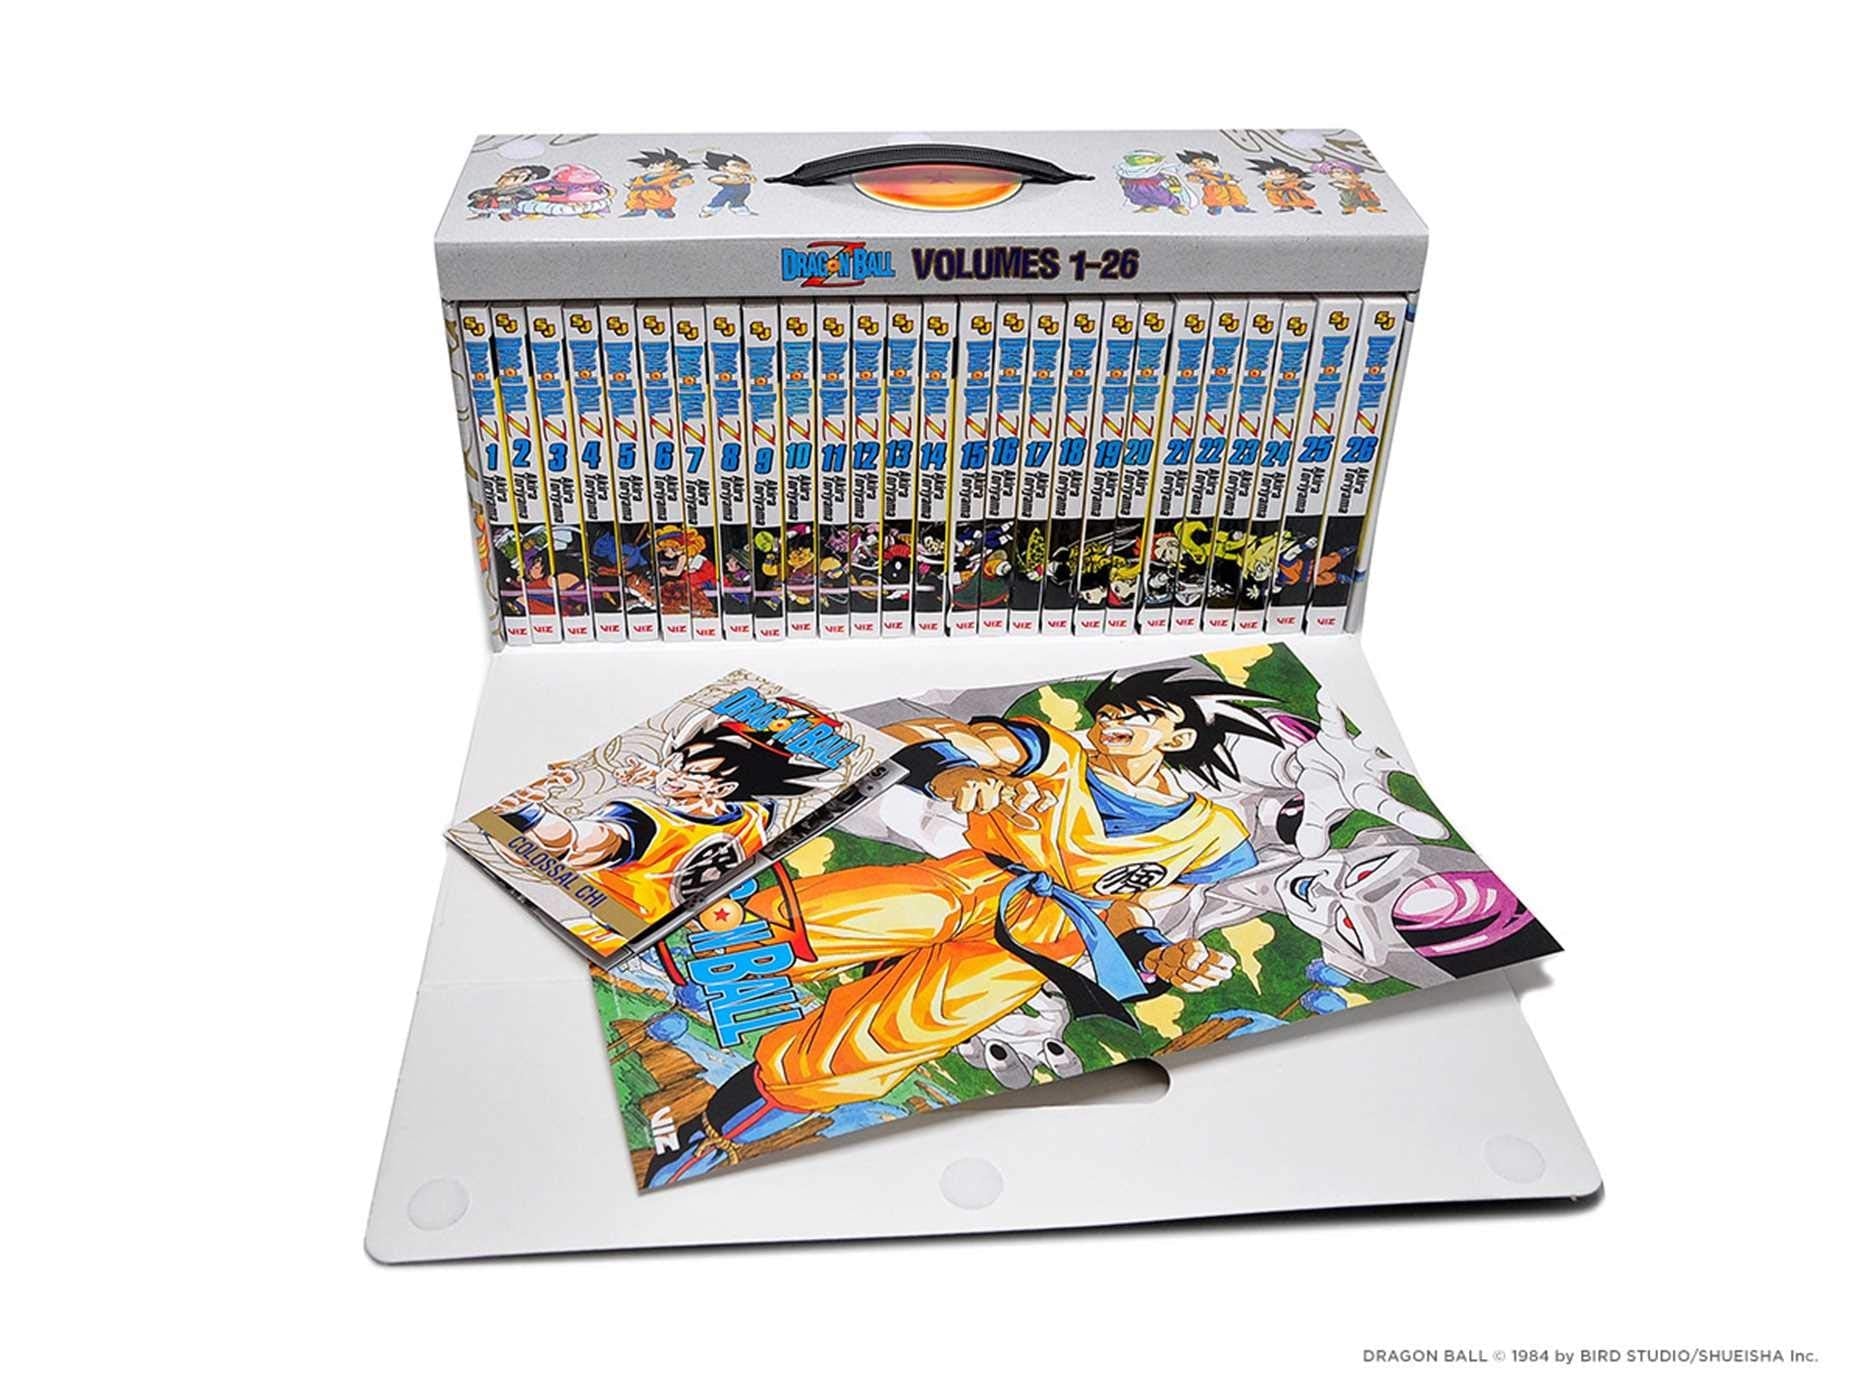 Shonen Jump: Dragon Ball Z Complete Box Set - Vol. 1-26 Premium Manga Set | Galactic Toys & Collectibles